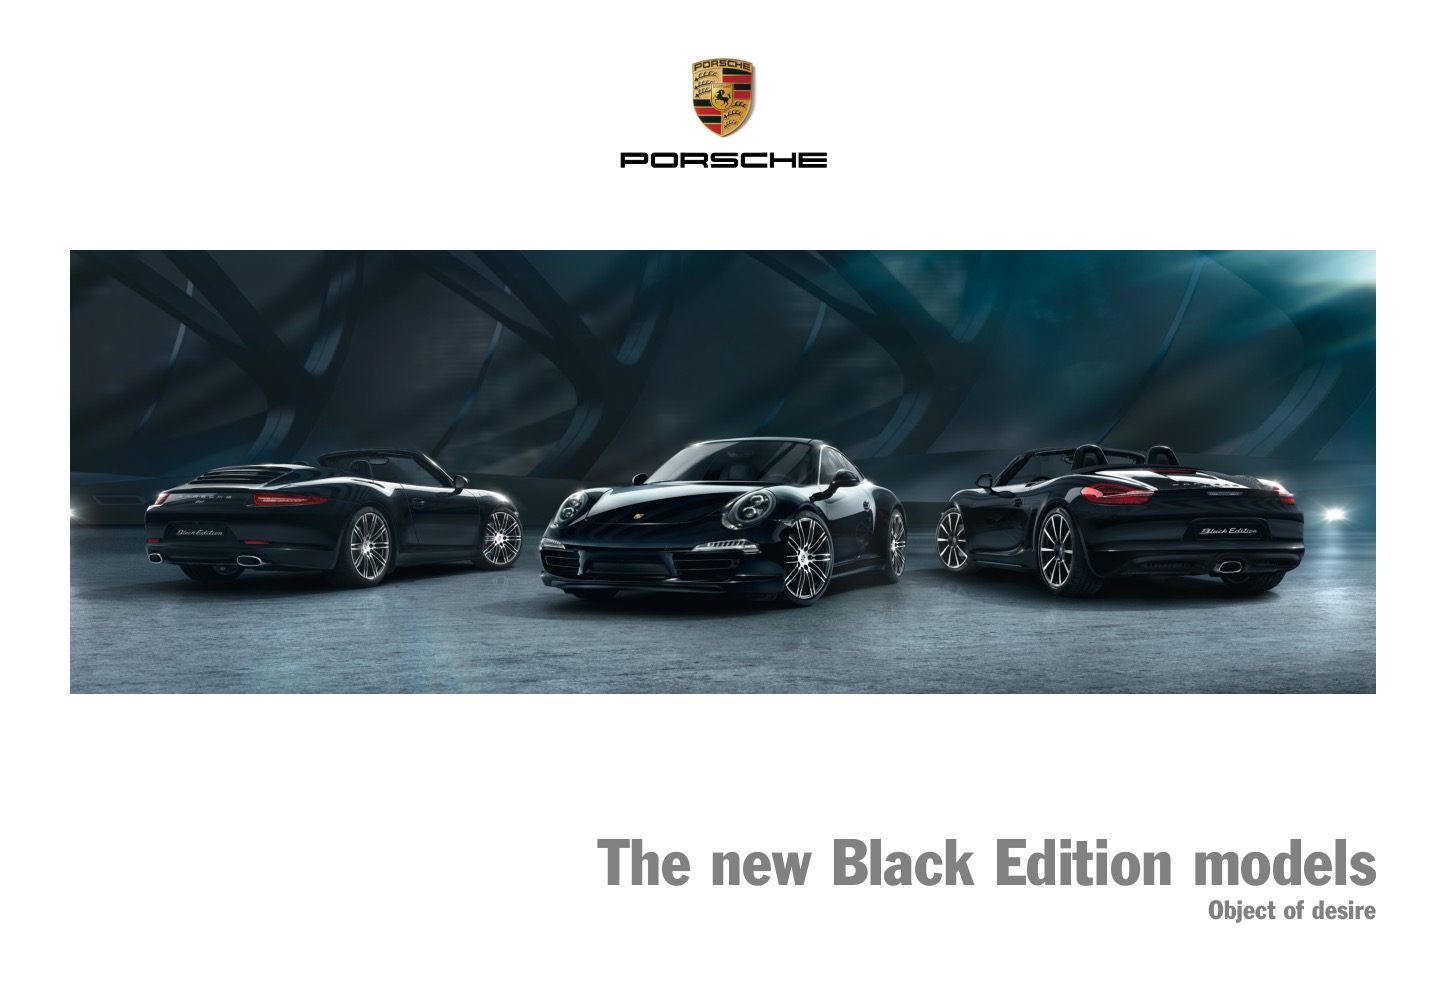 2015 Porsche Black Edition Brochure Page 4